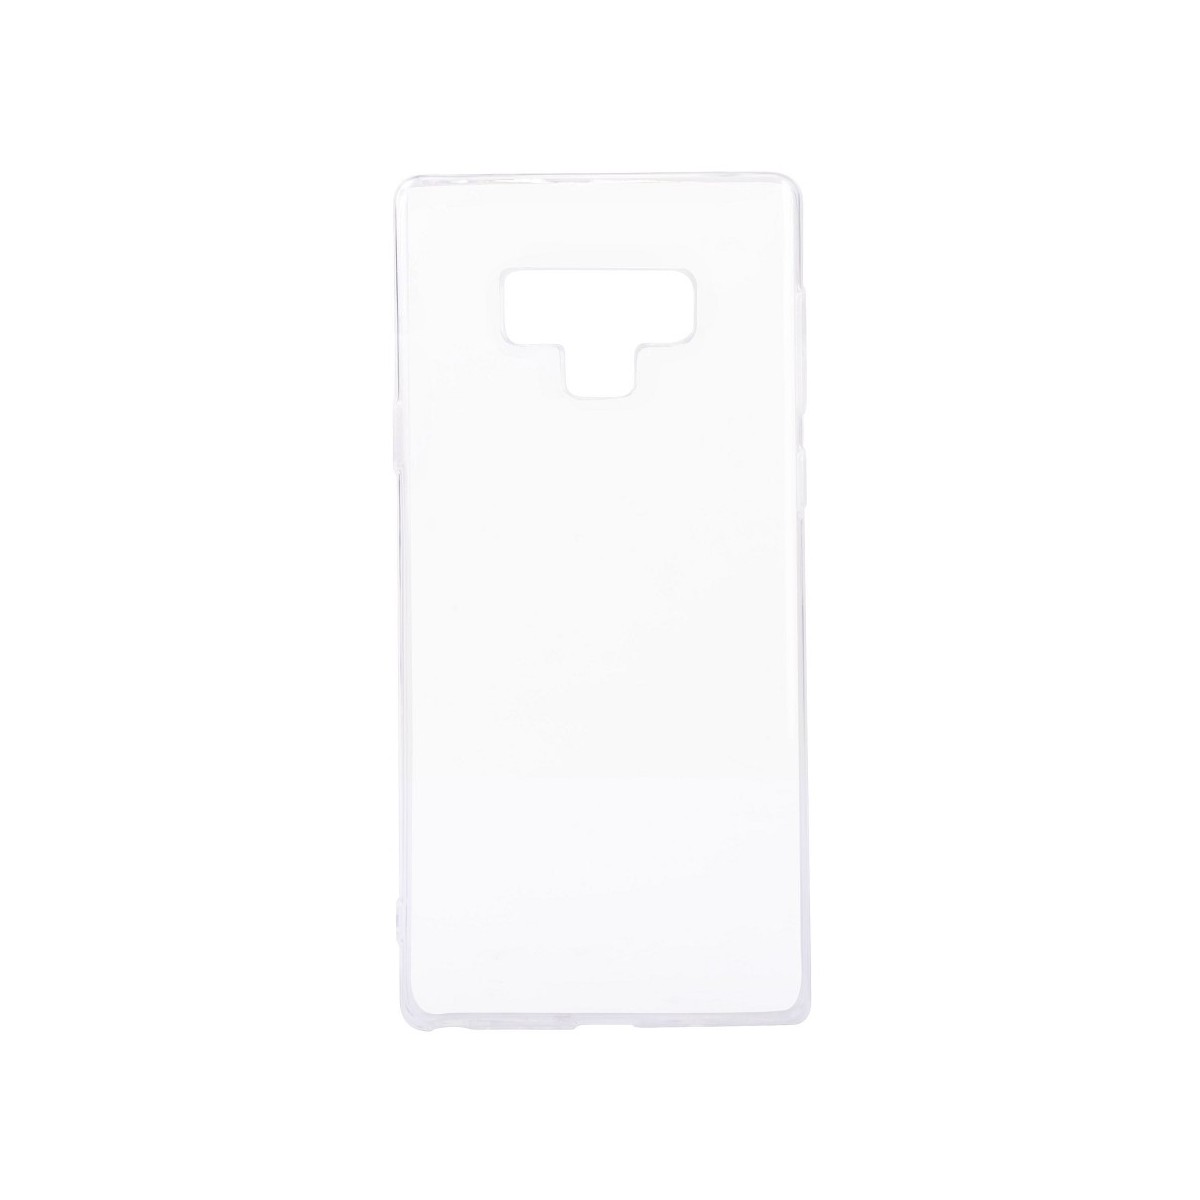 Coque Galaxy Note 9 transparente et souple - Crazy Kase